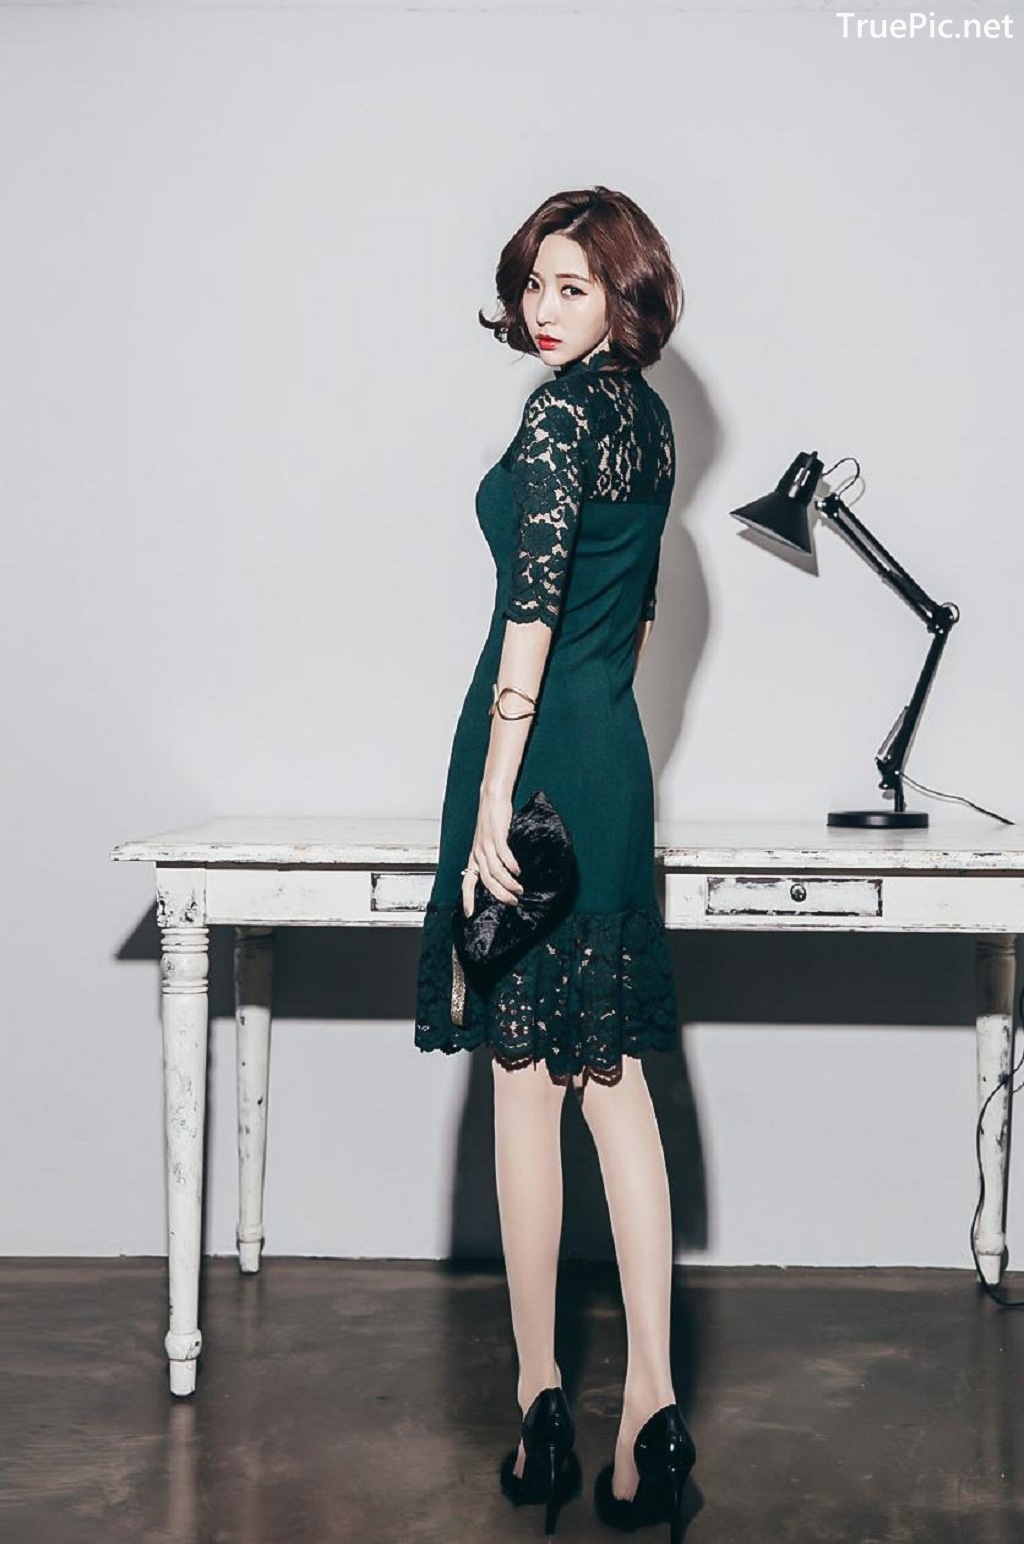 Image Ye Jin - Korean Fashion Model - Studio Photoshoot Collection - TruePic.net - Picture-31